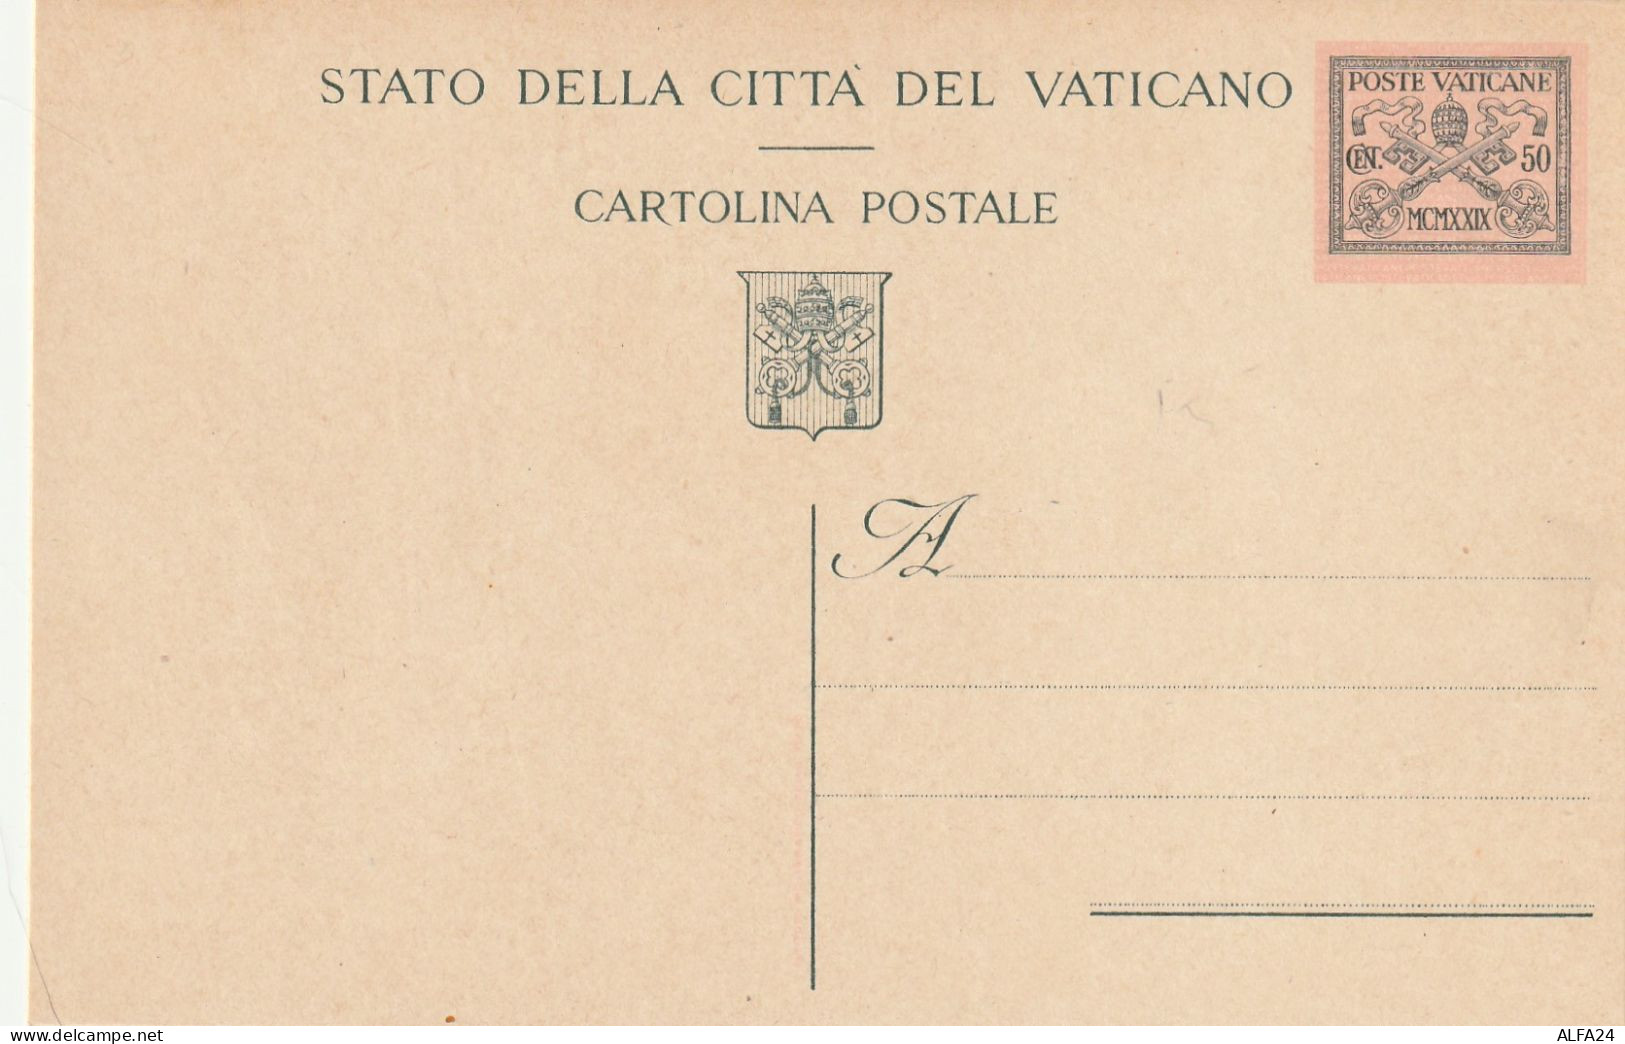 INTERO POSTALE NUOVO C.50 1930 VATICANO (ZP3817 - Postal Stationeries